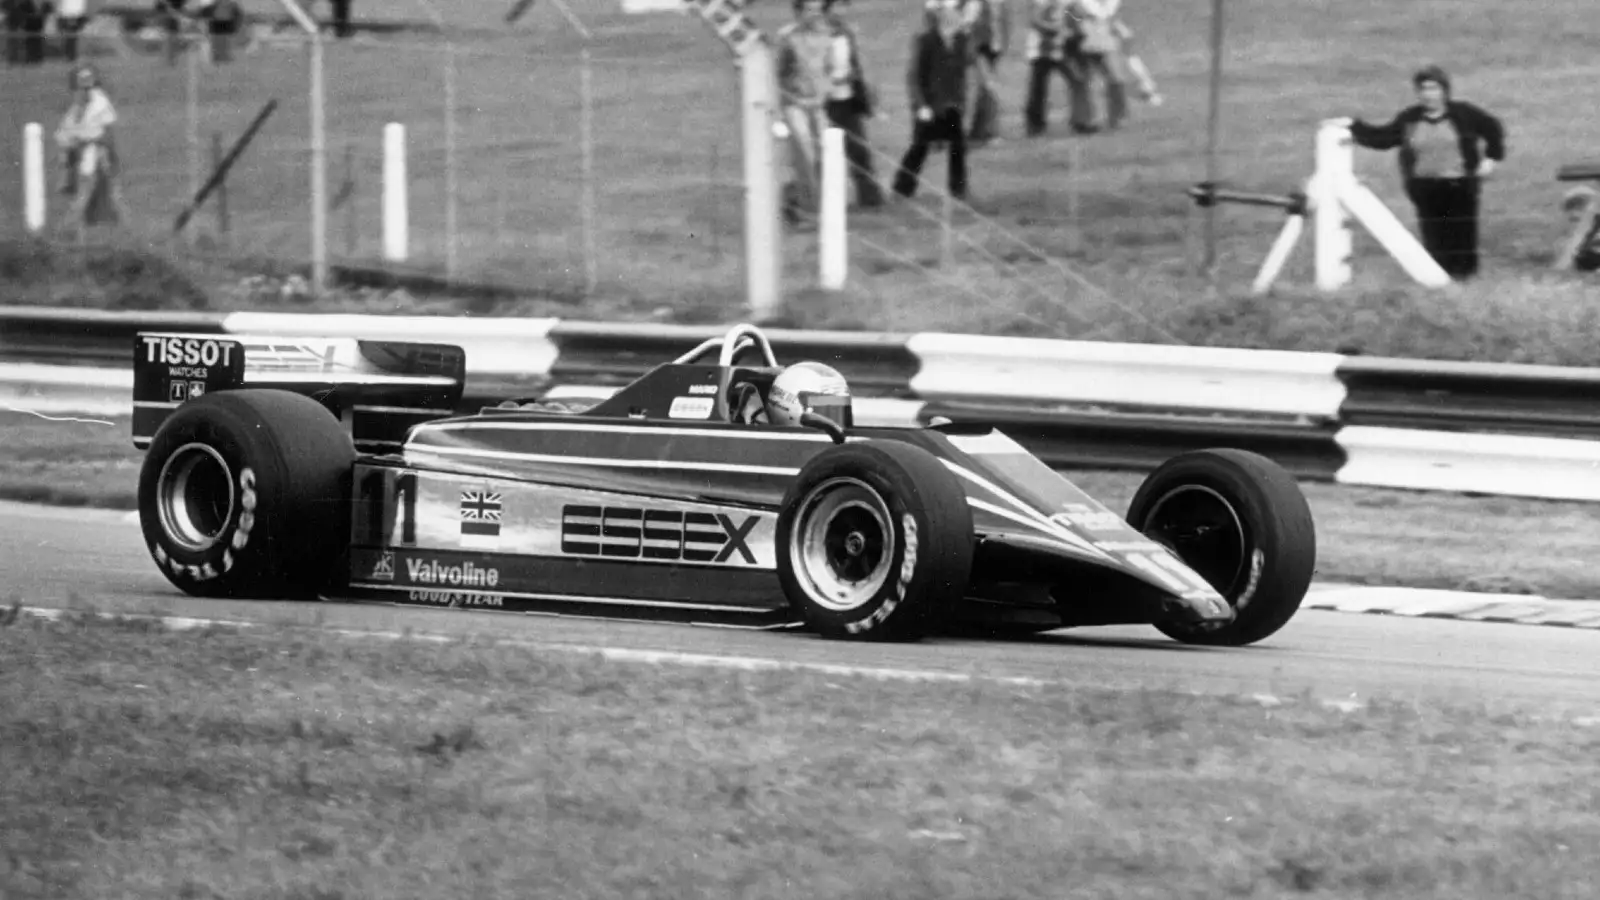 The 1981 Lotus 88, driven by Elio de Angelis.